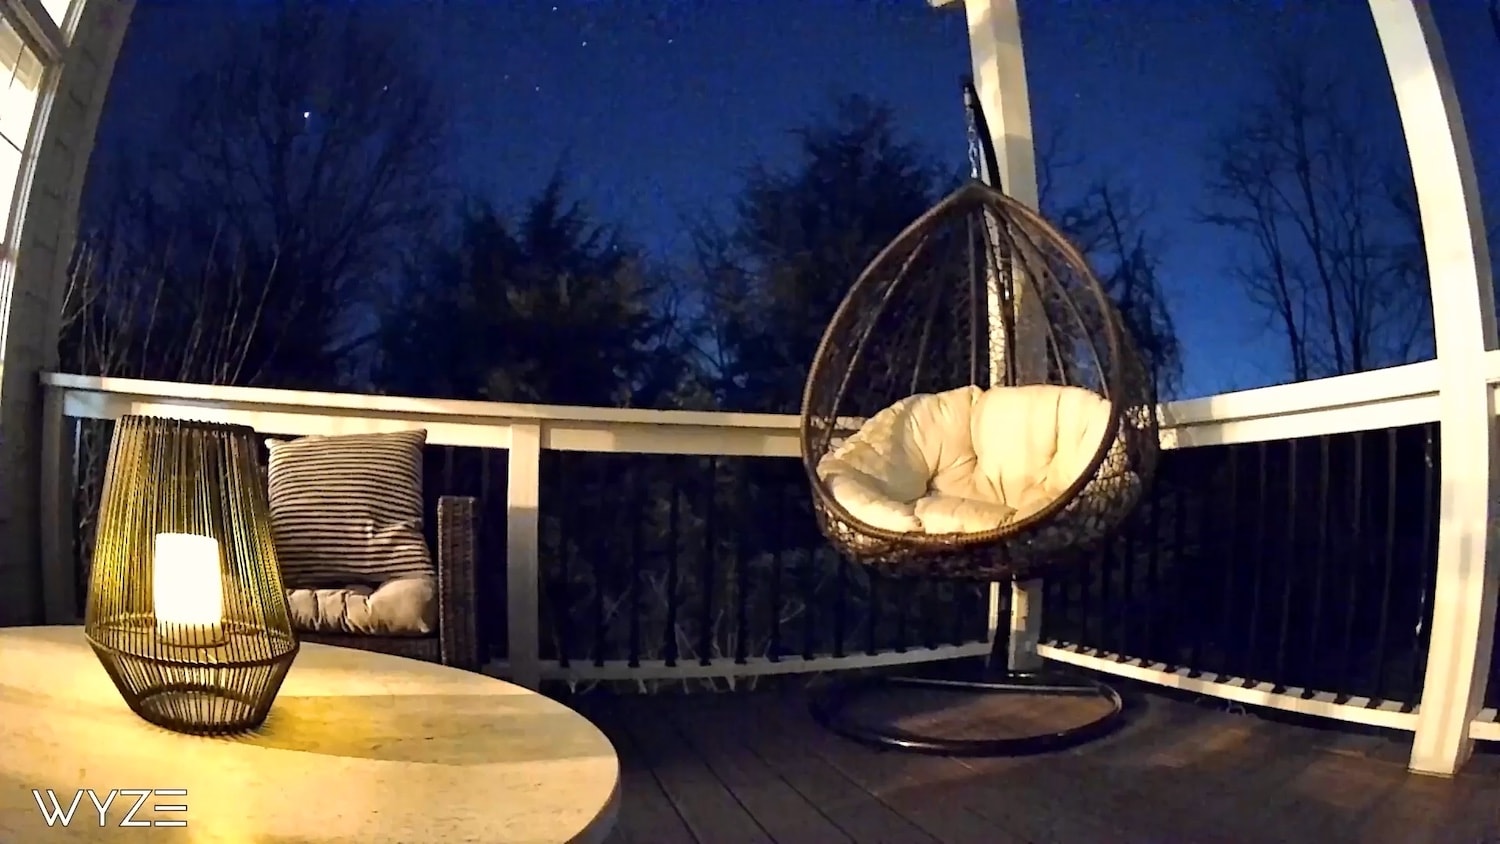 Load video: Wyze Cam Outdoor Night Shot